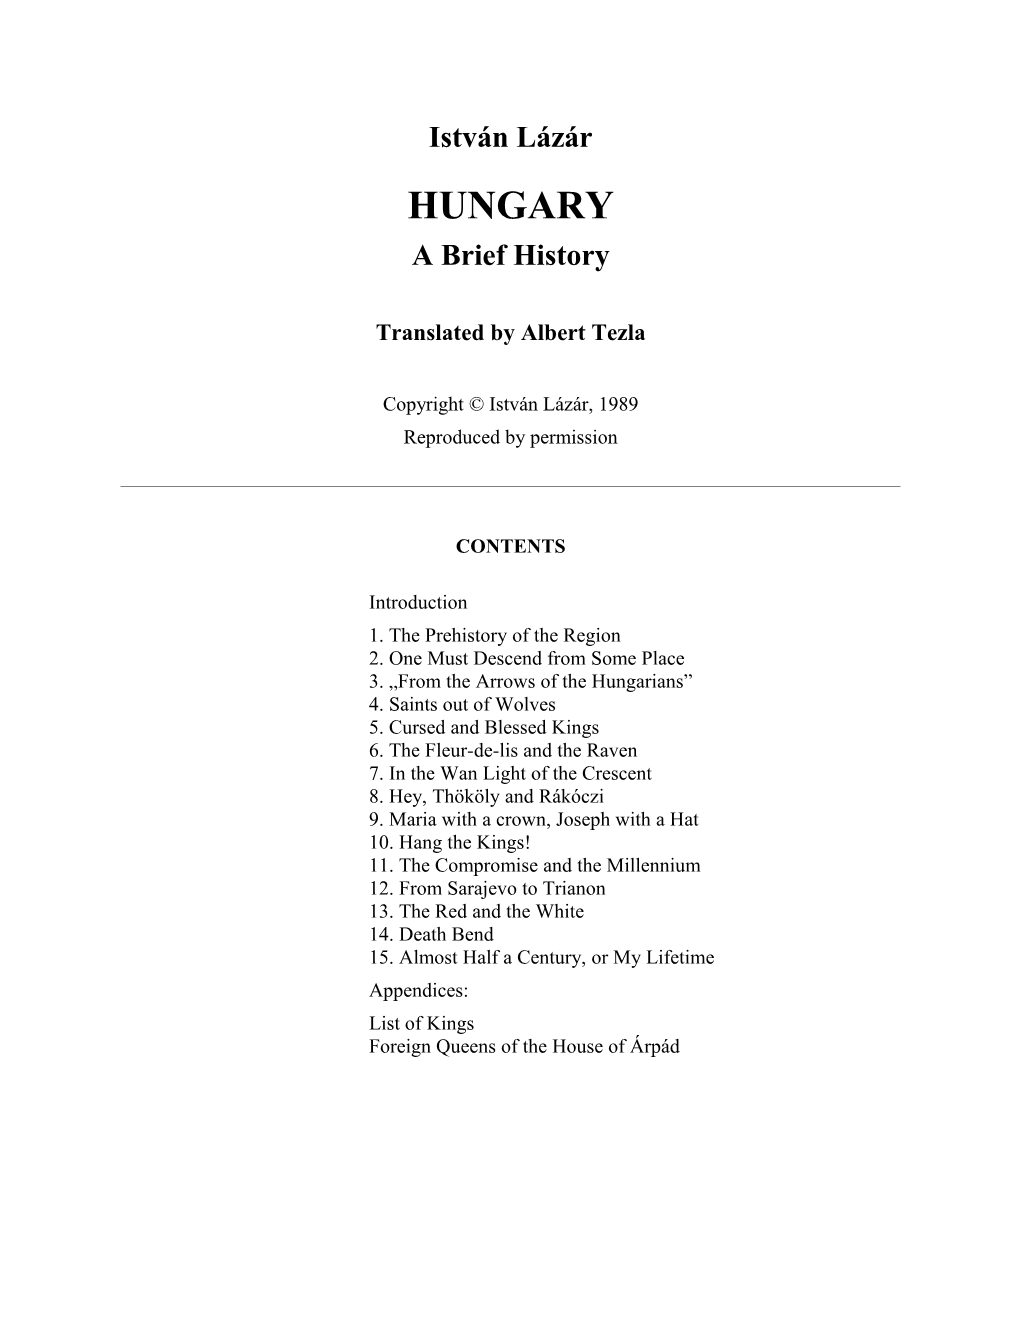 Hungary - a Brief History